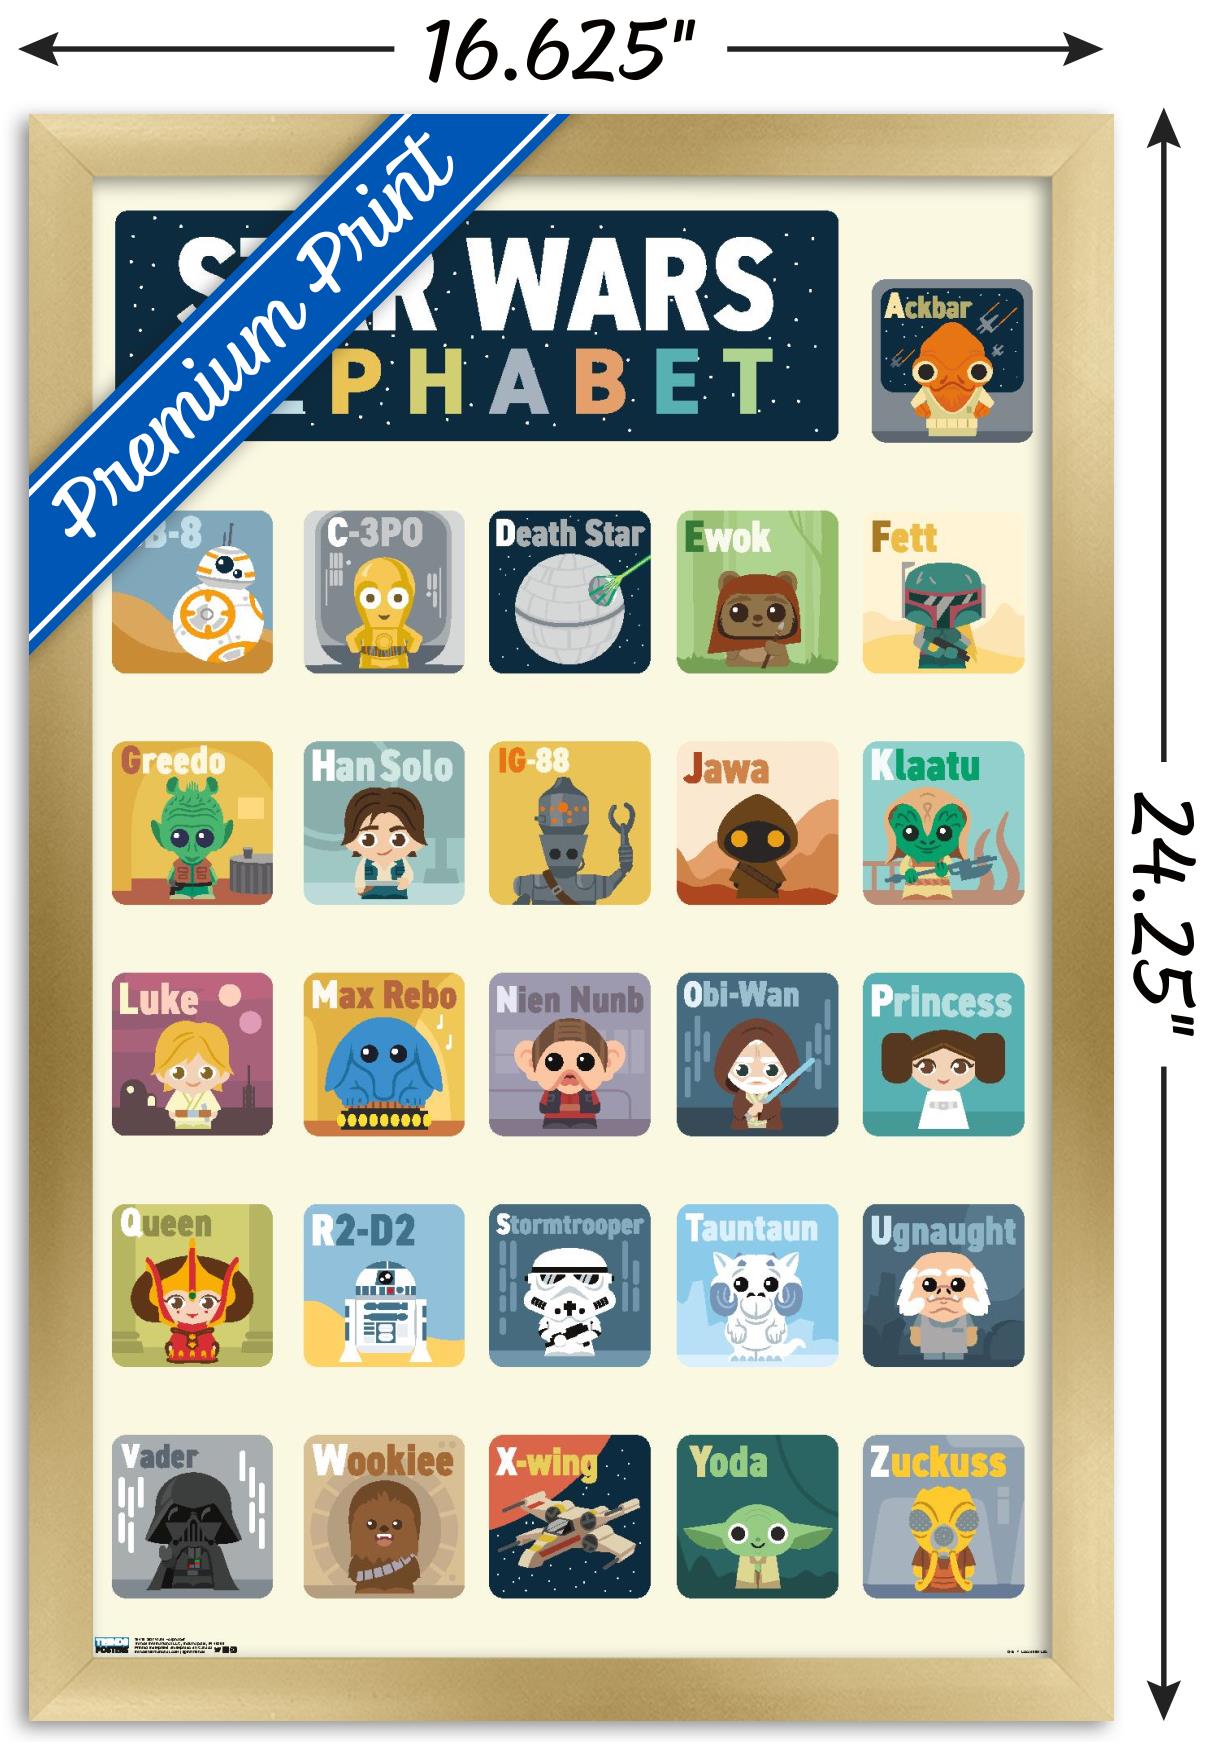 Star Wars: Saga - Alphabet Wall Poster, 14.725" x 22.375", Framed - image 3 of 5